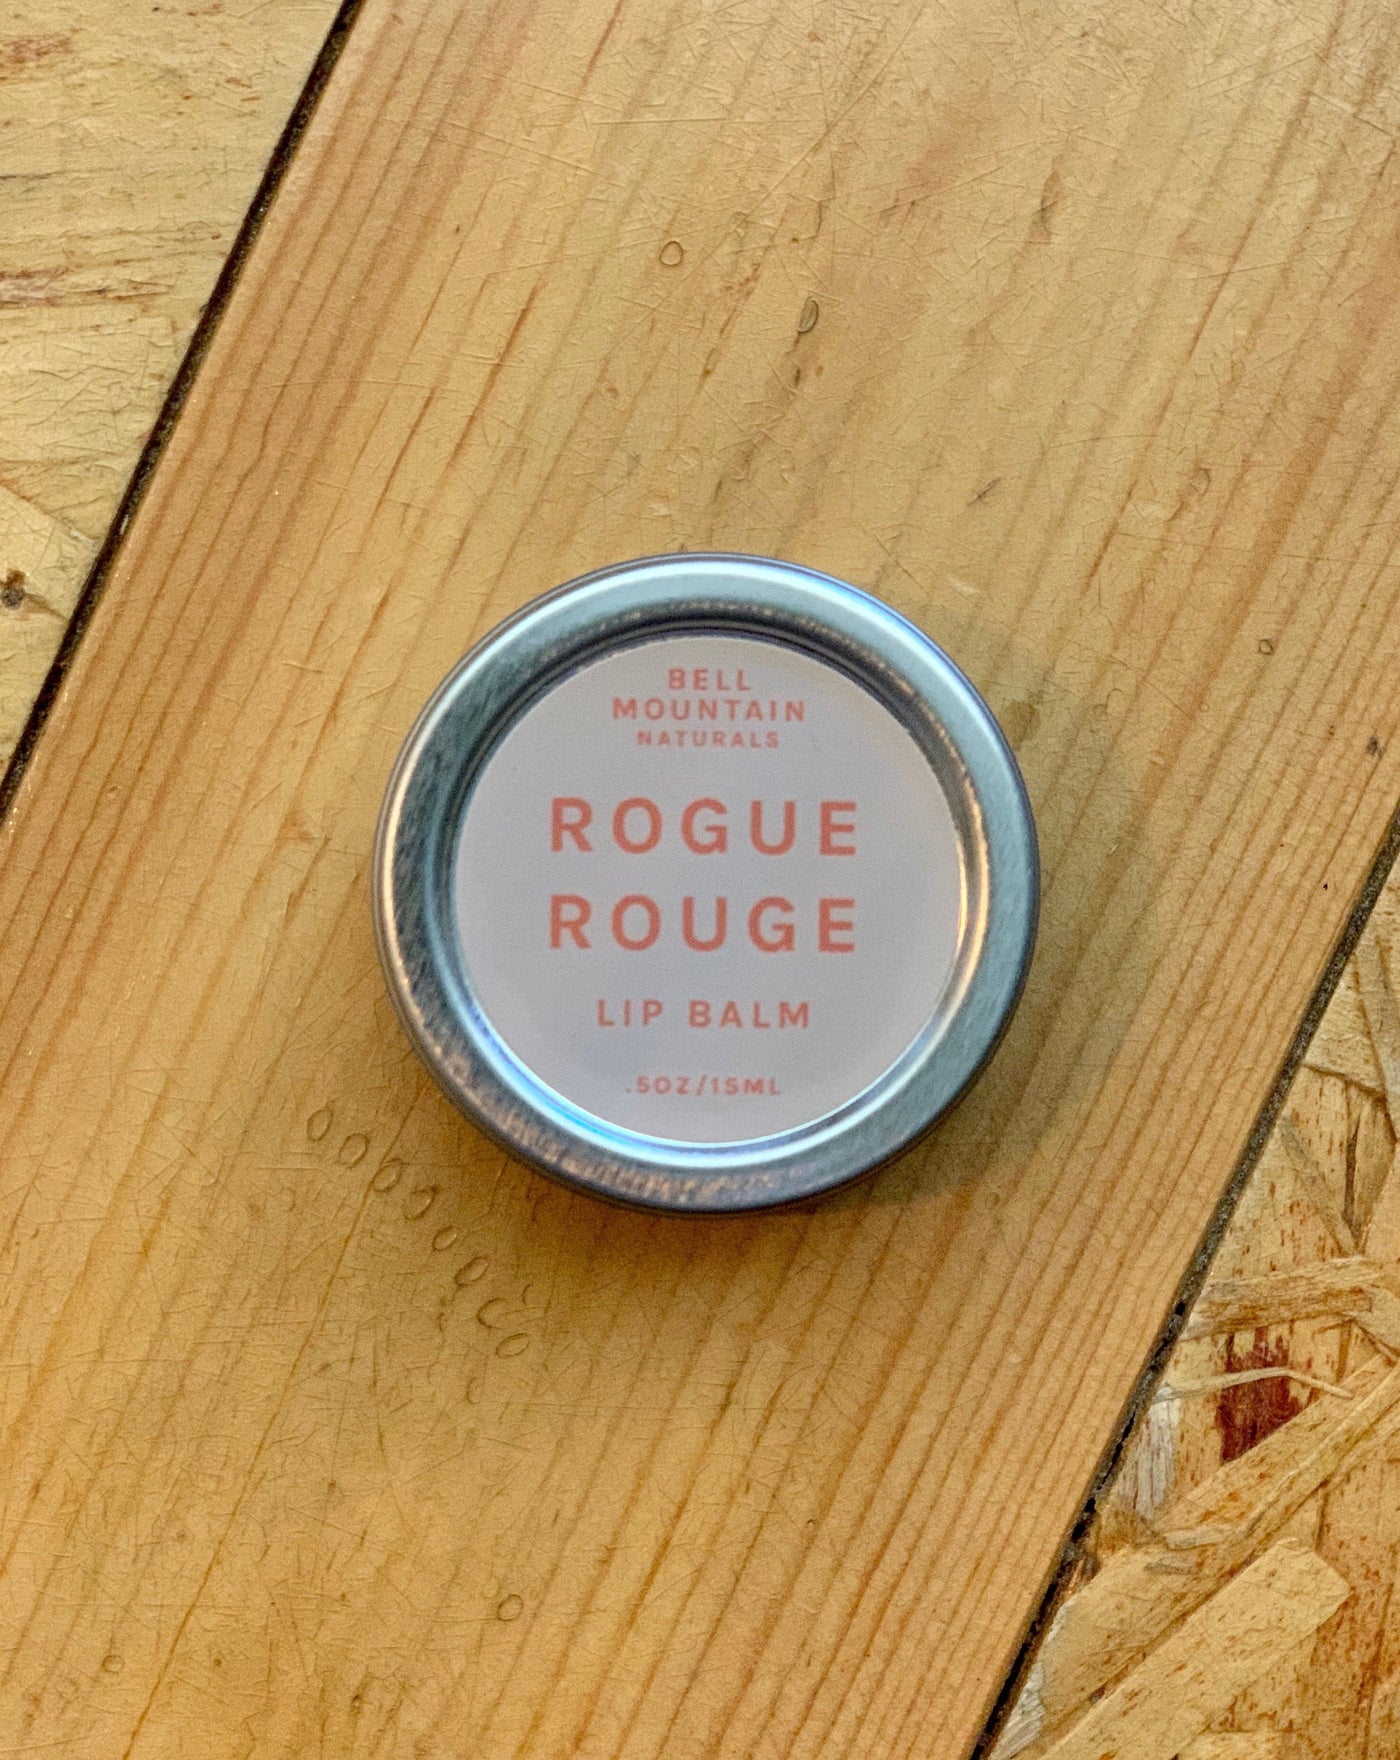 Bell Mountain 'Rogue Rouge' Lip Balm